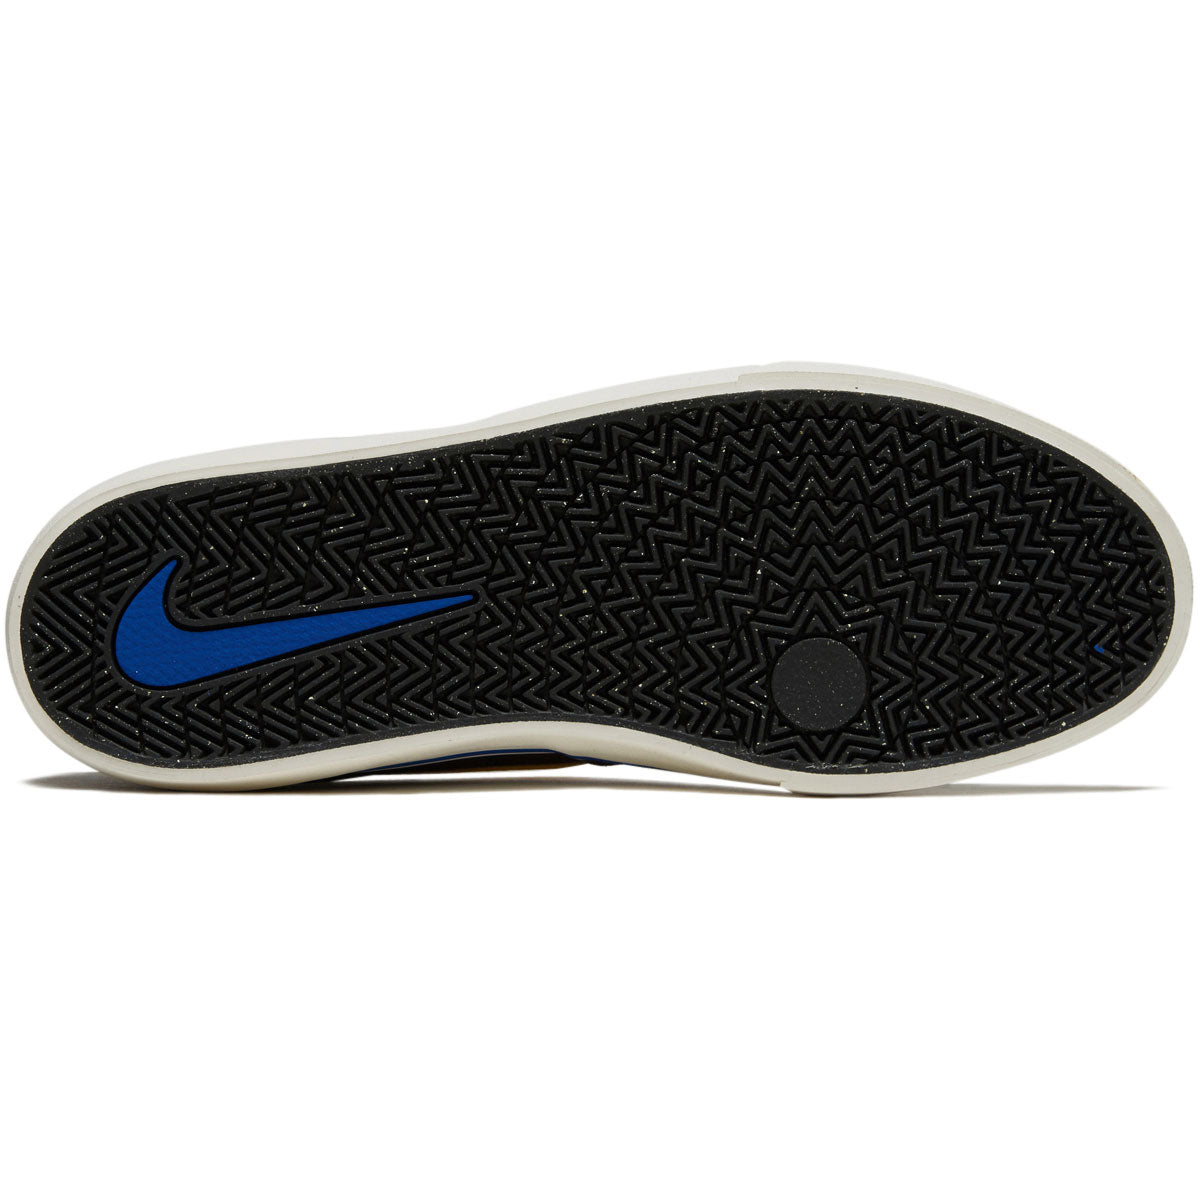 Nike SB Chron 2 Shoes - Anthracite/University Gold/Anthracite image 4